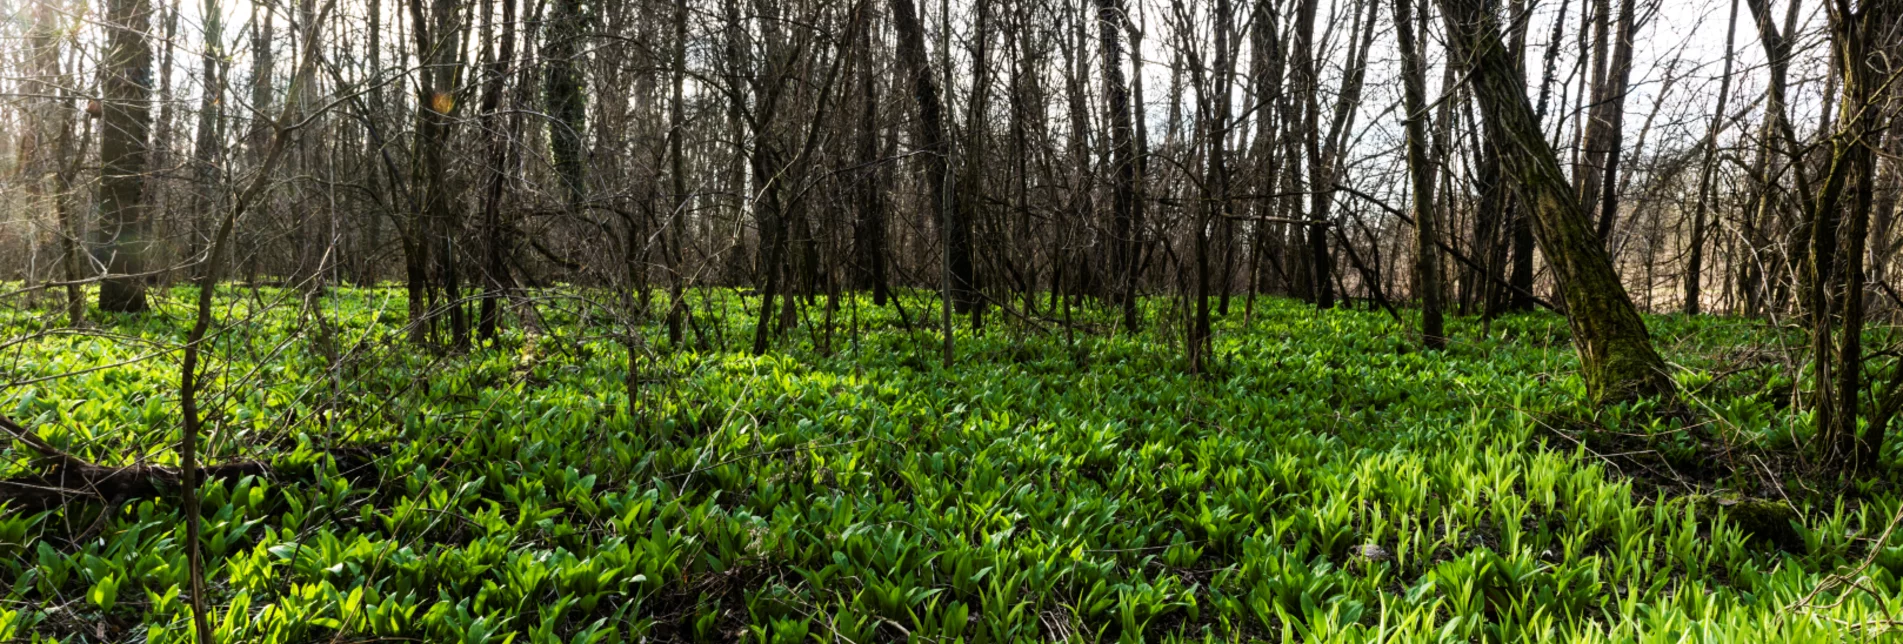 Garlicky scent of ramsons permeates the forest floor of the Mura meadows | © Thermen- & Vulkanland Steiermark | Pixelmaker